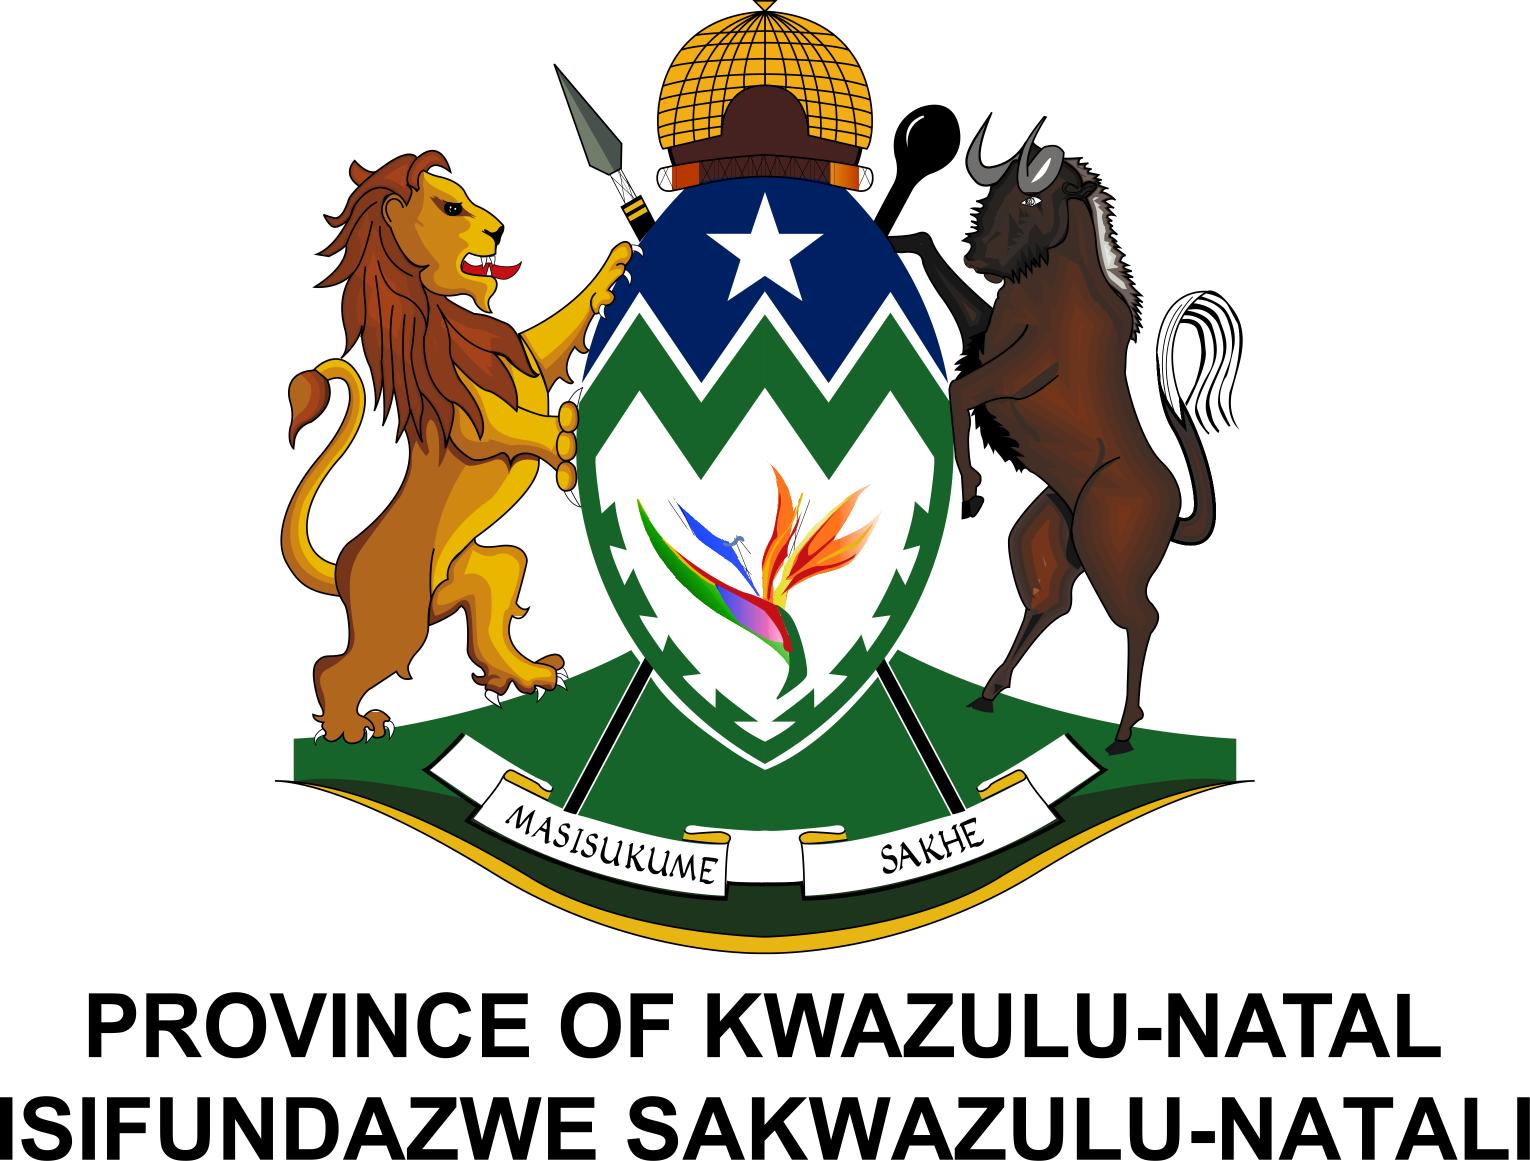 Coat of Arms zulu